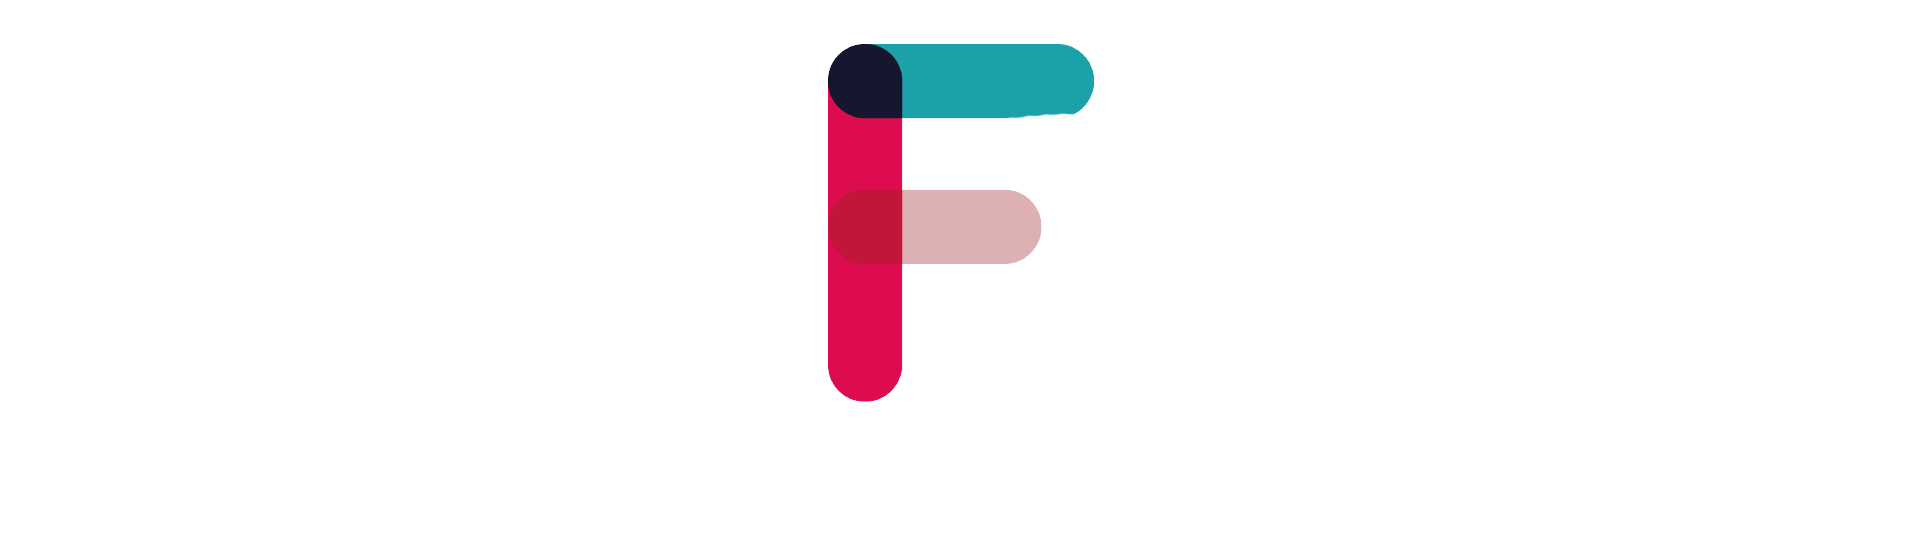 Frifond logo